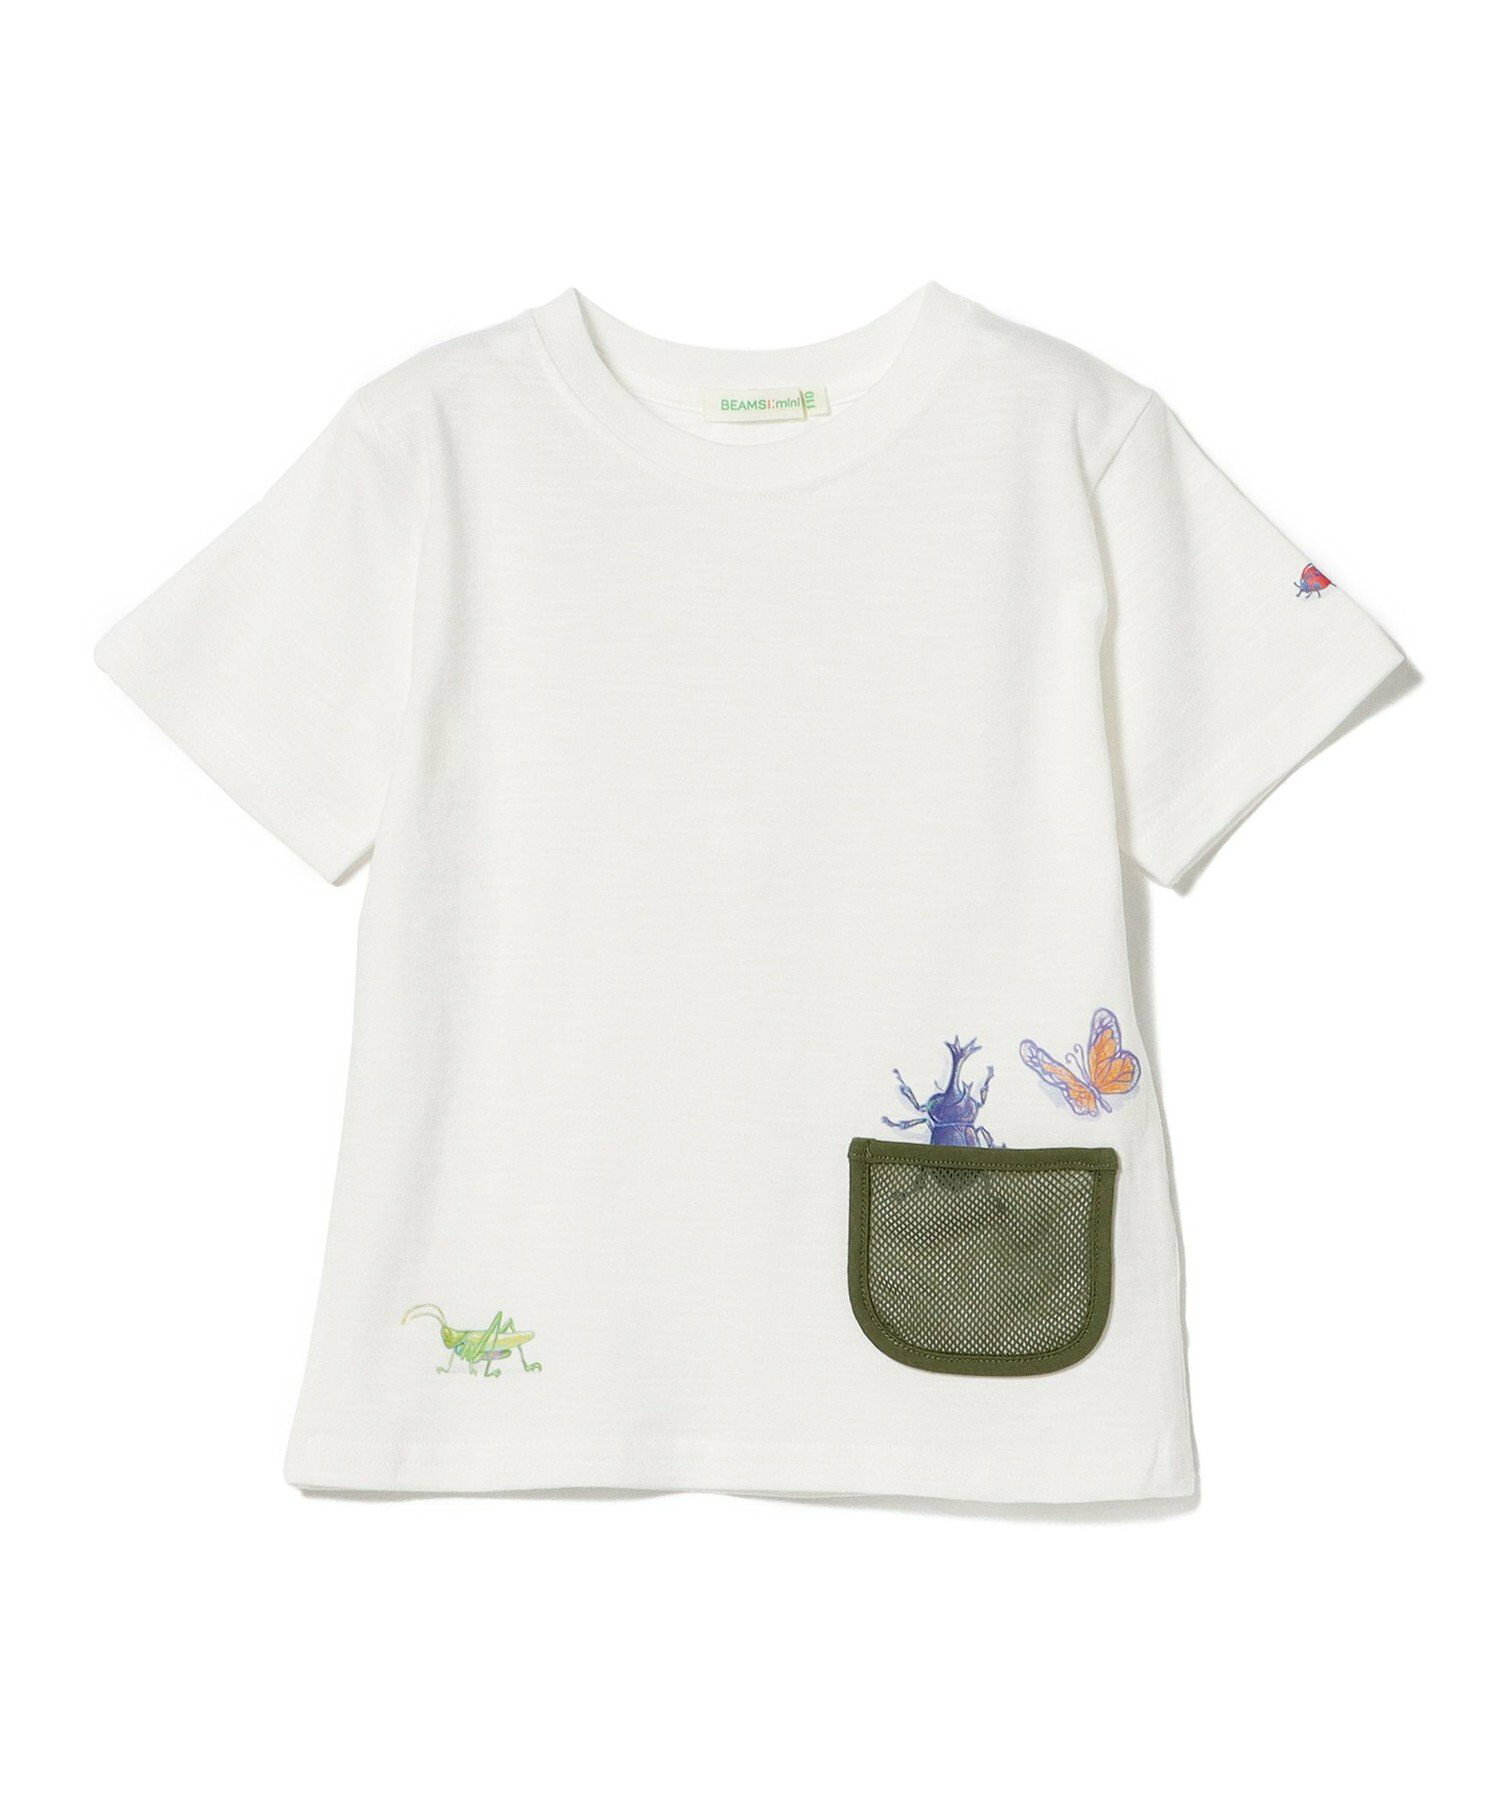 BEAMS mini / メッシュポケット 昆虫Tシャツ (90~130cm)